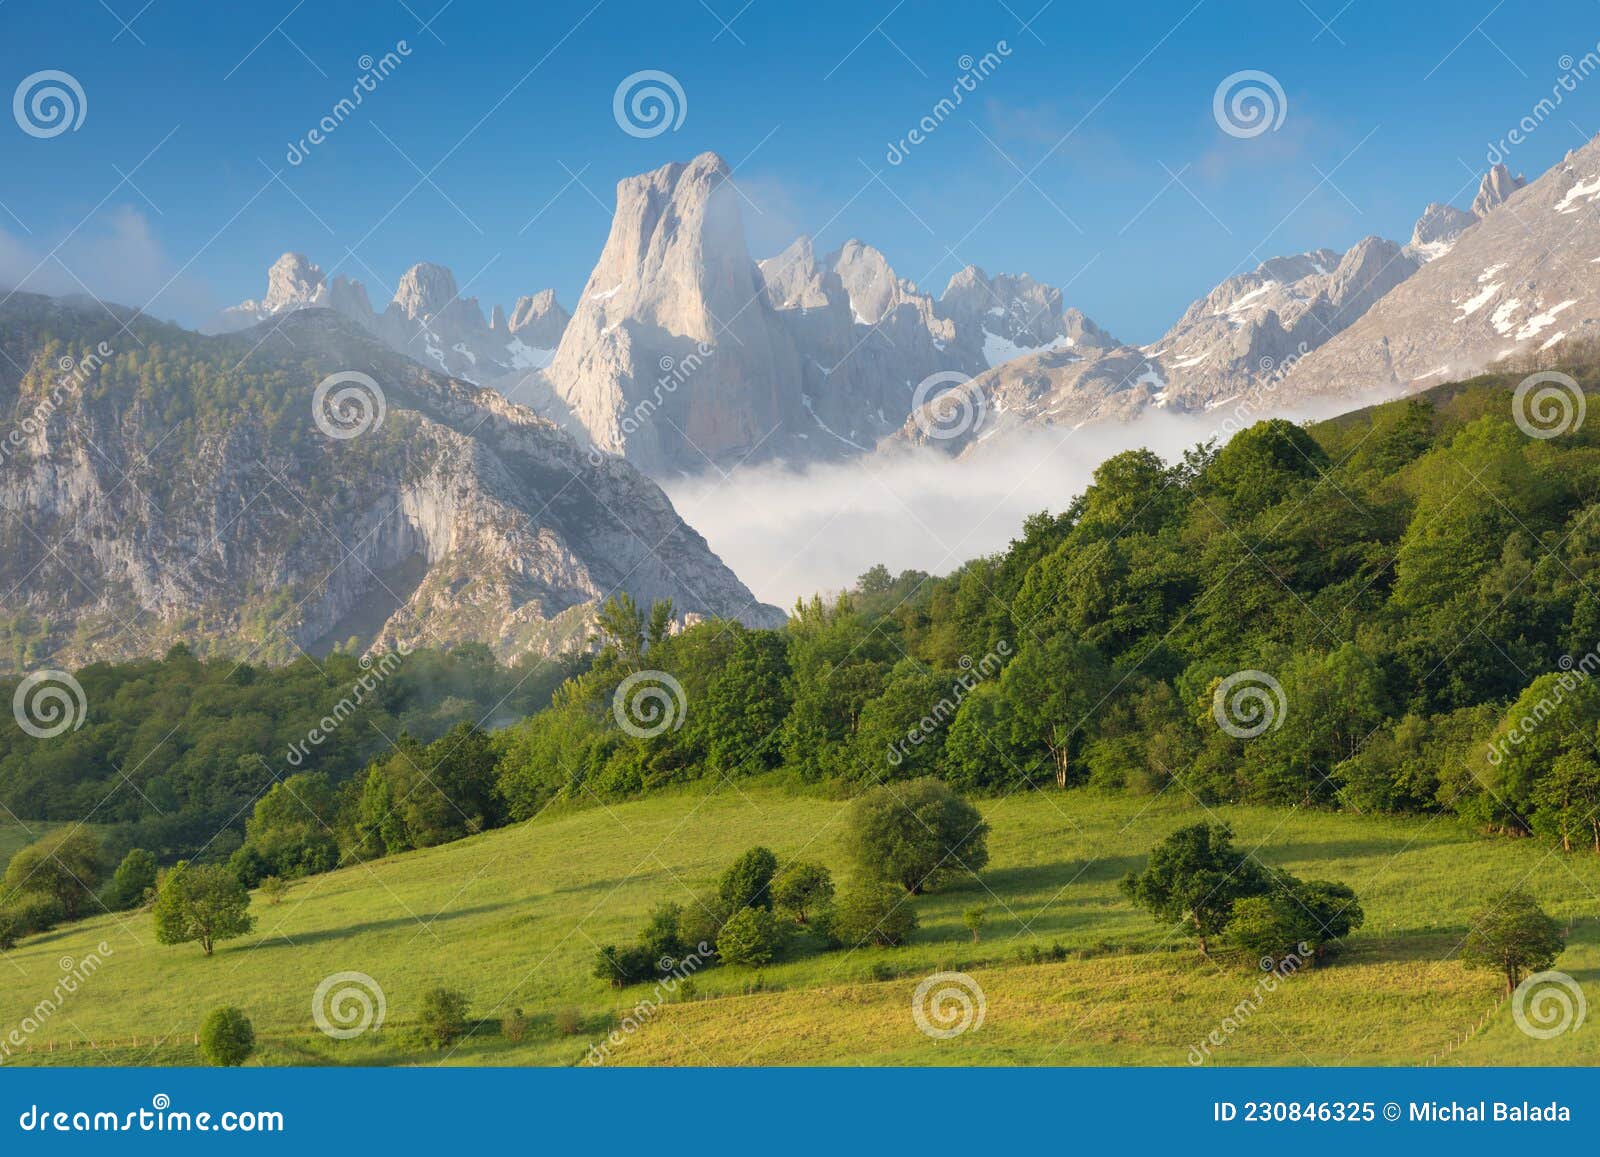 the naranjo de bulnes, known as picu urriellu, is a limestone peak, located in the macizo central region of the picos de europa